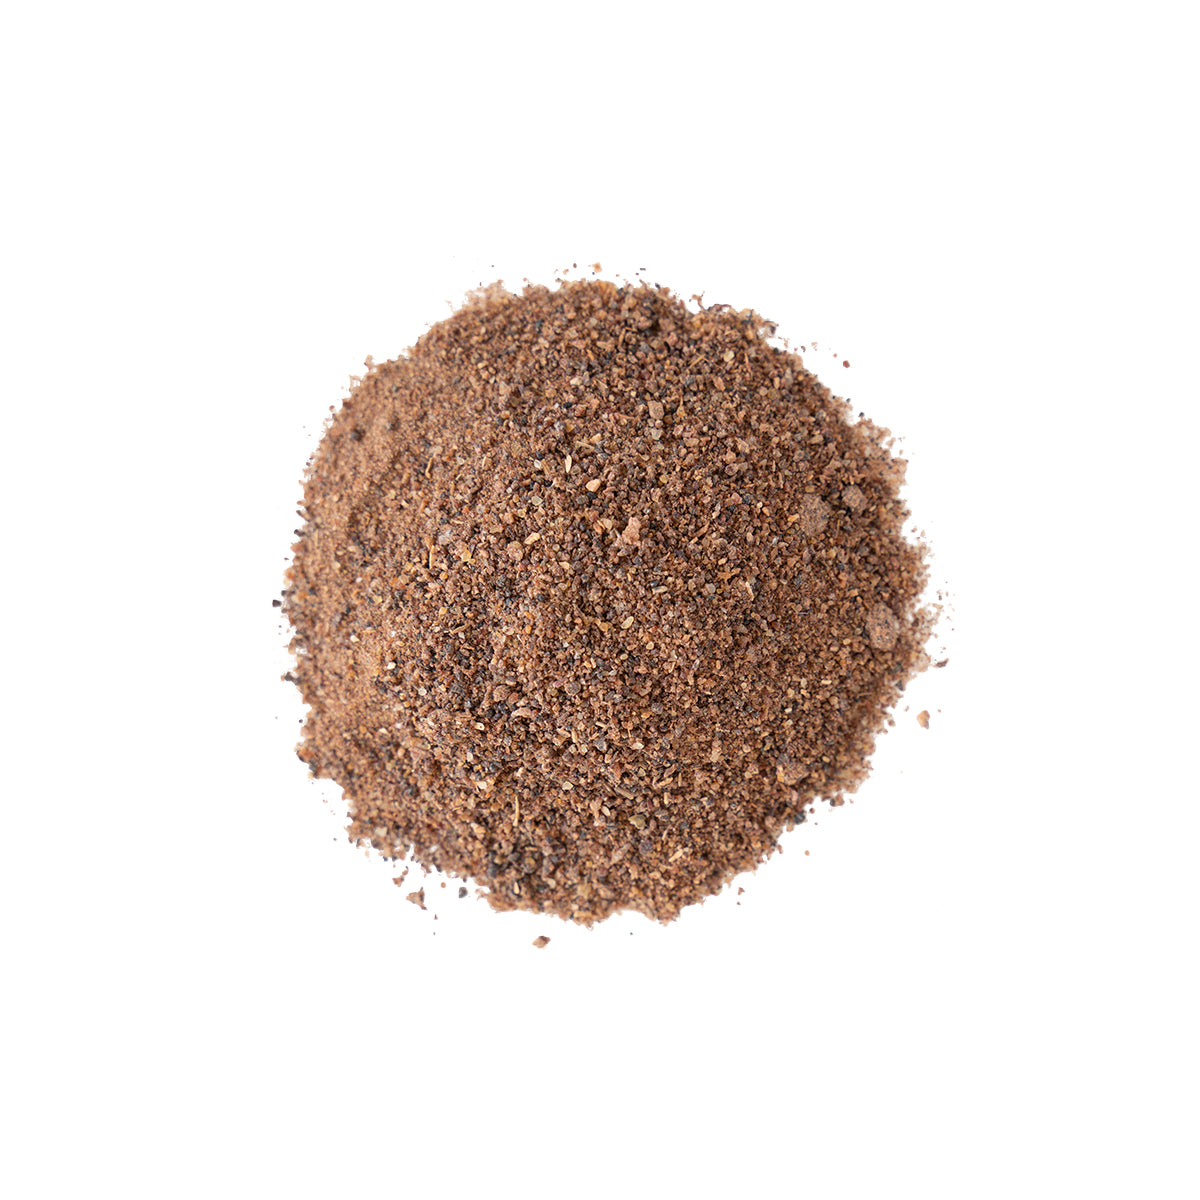 Primary Image of Myrrh Gum Powder (Commiphora molmol)